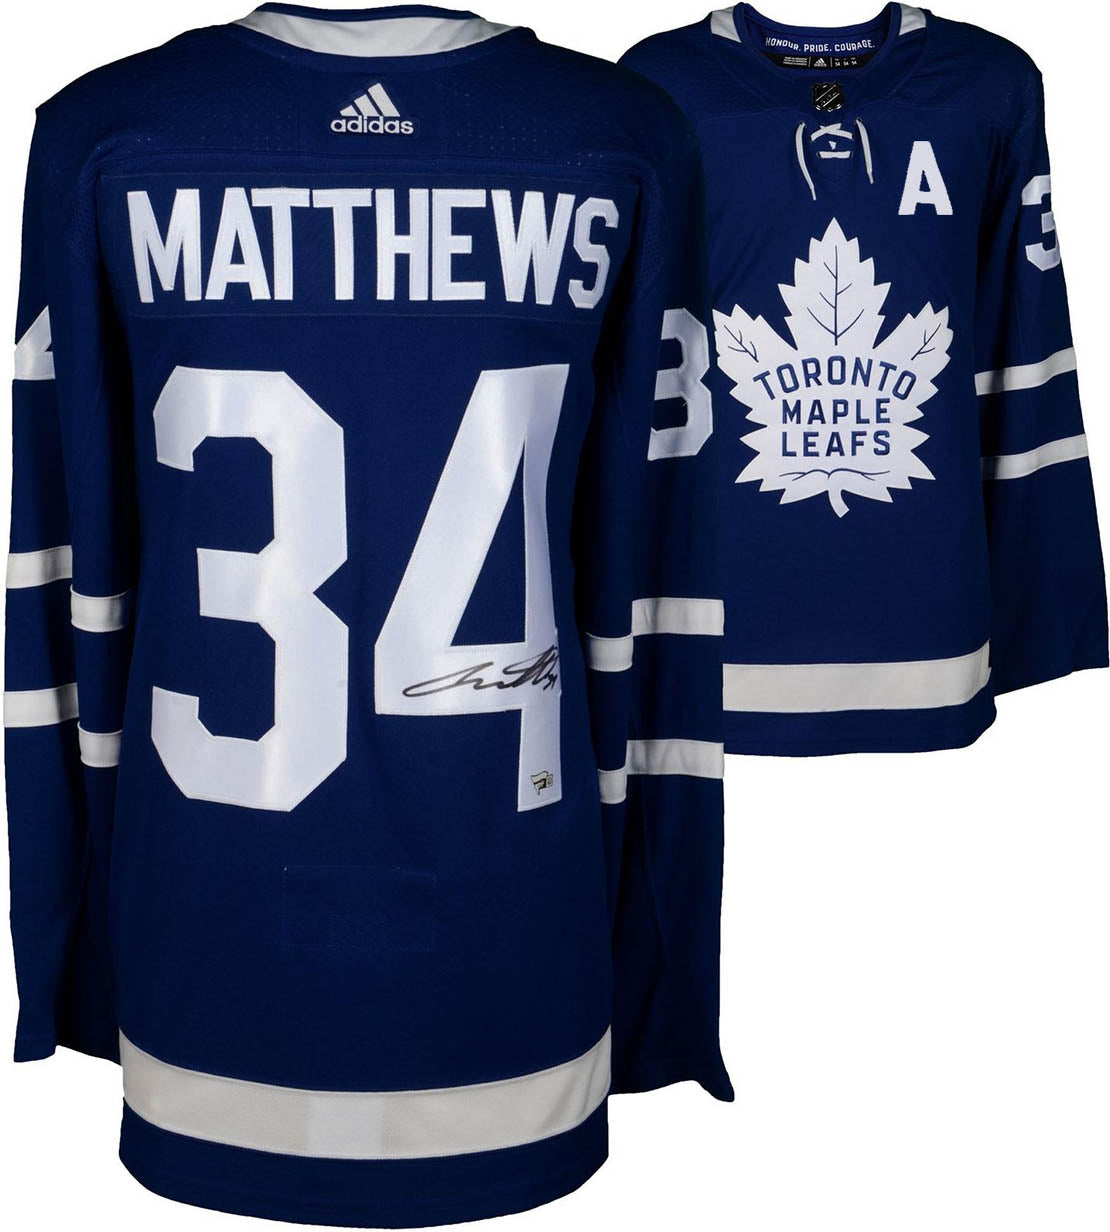 Mats Sundin Autographed Toronto Maple Leafs Reebok Pro Jersey